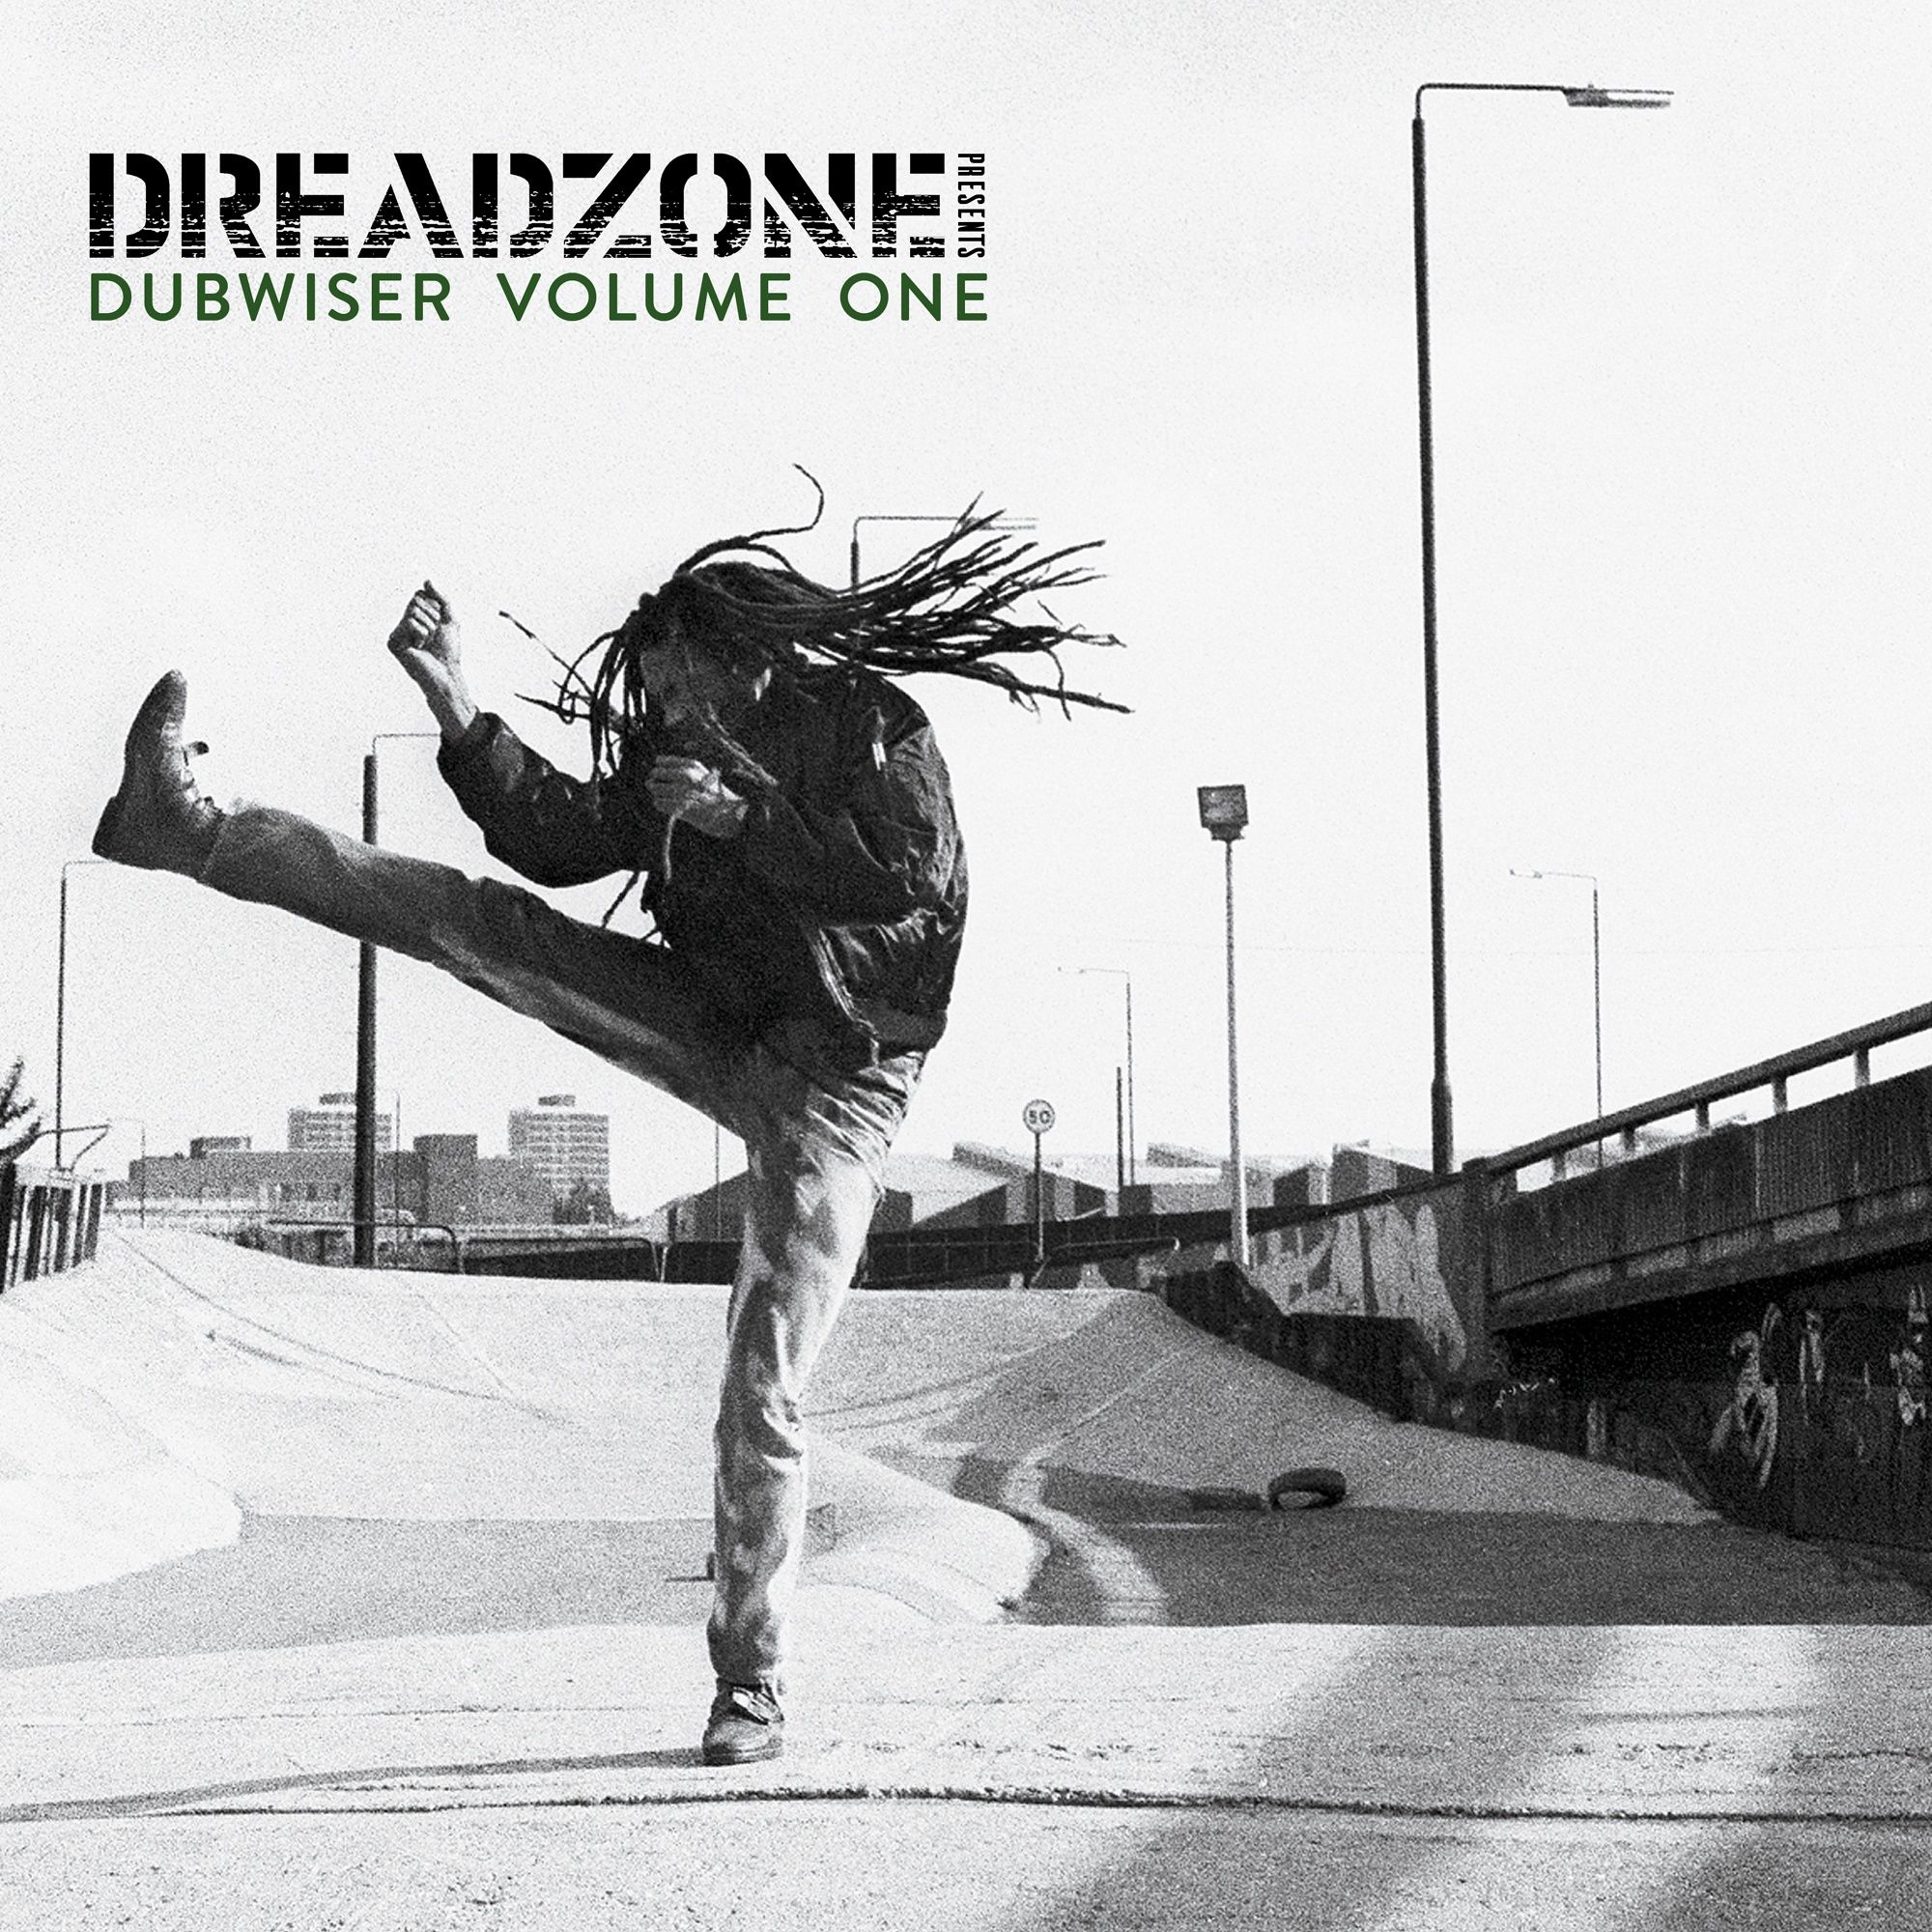 DREADZONE PRESENTS – DUBWISER VOLUME 1